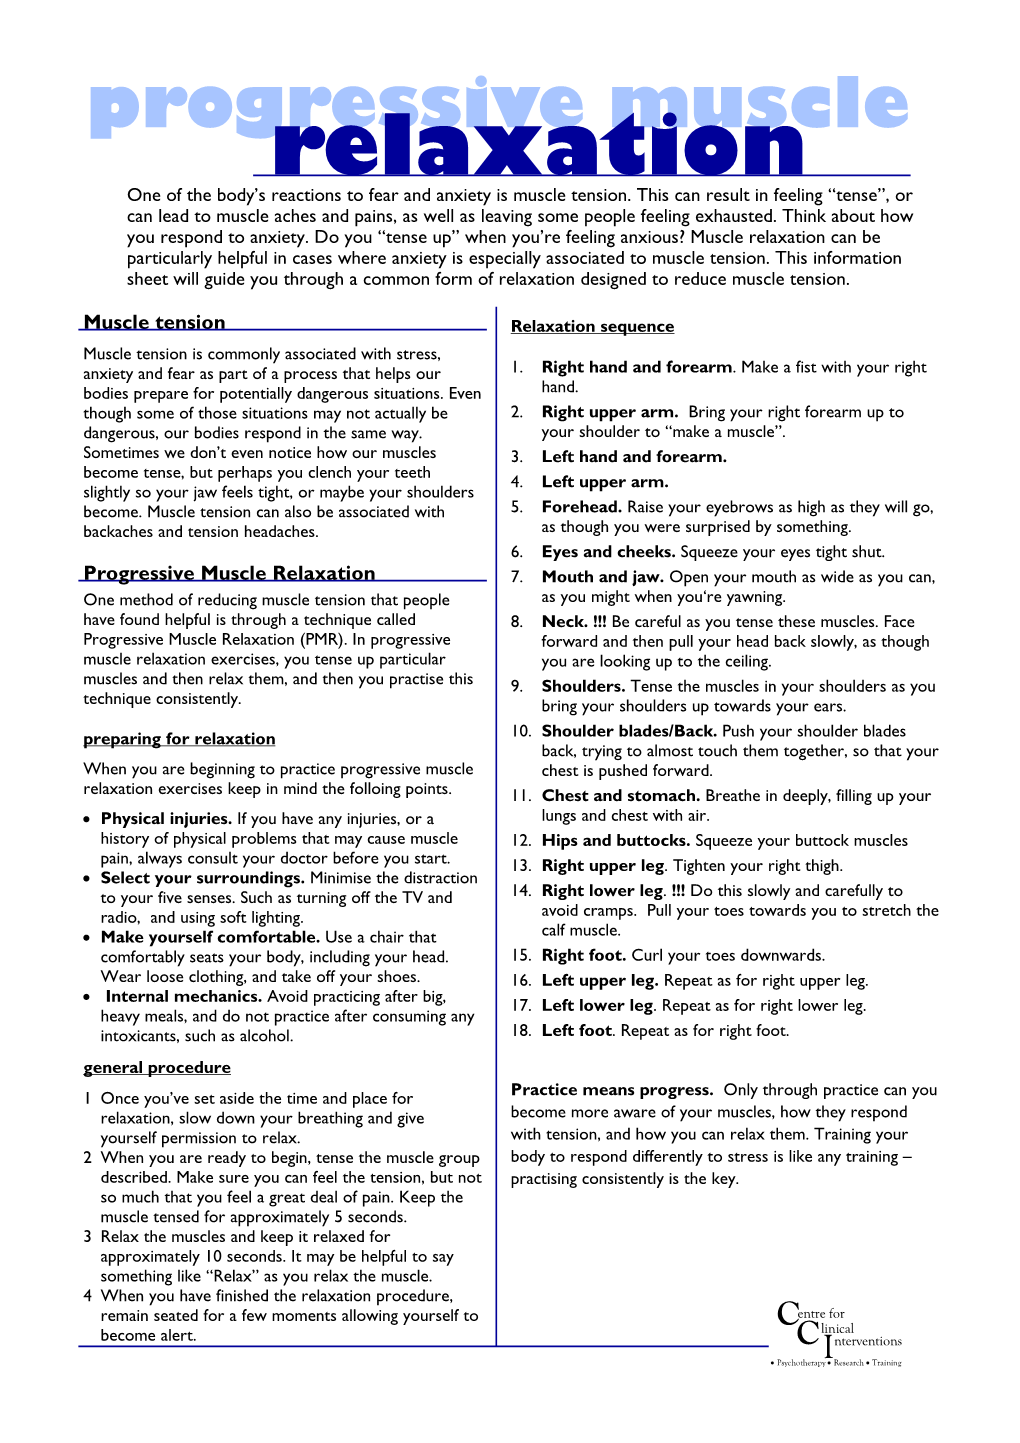 Progressive Muscle Relaxation Information Sheet